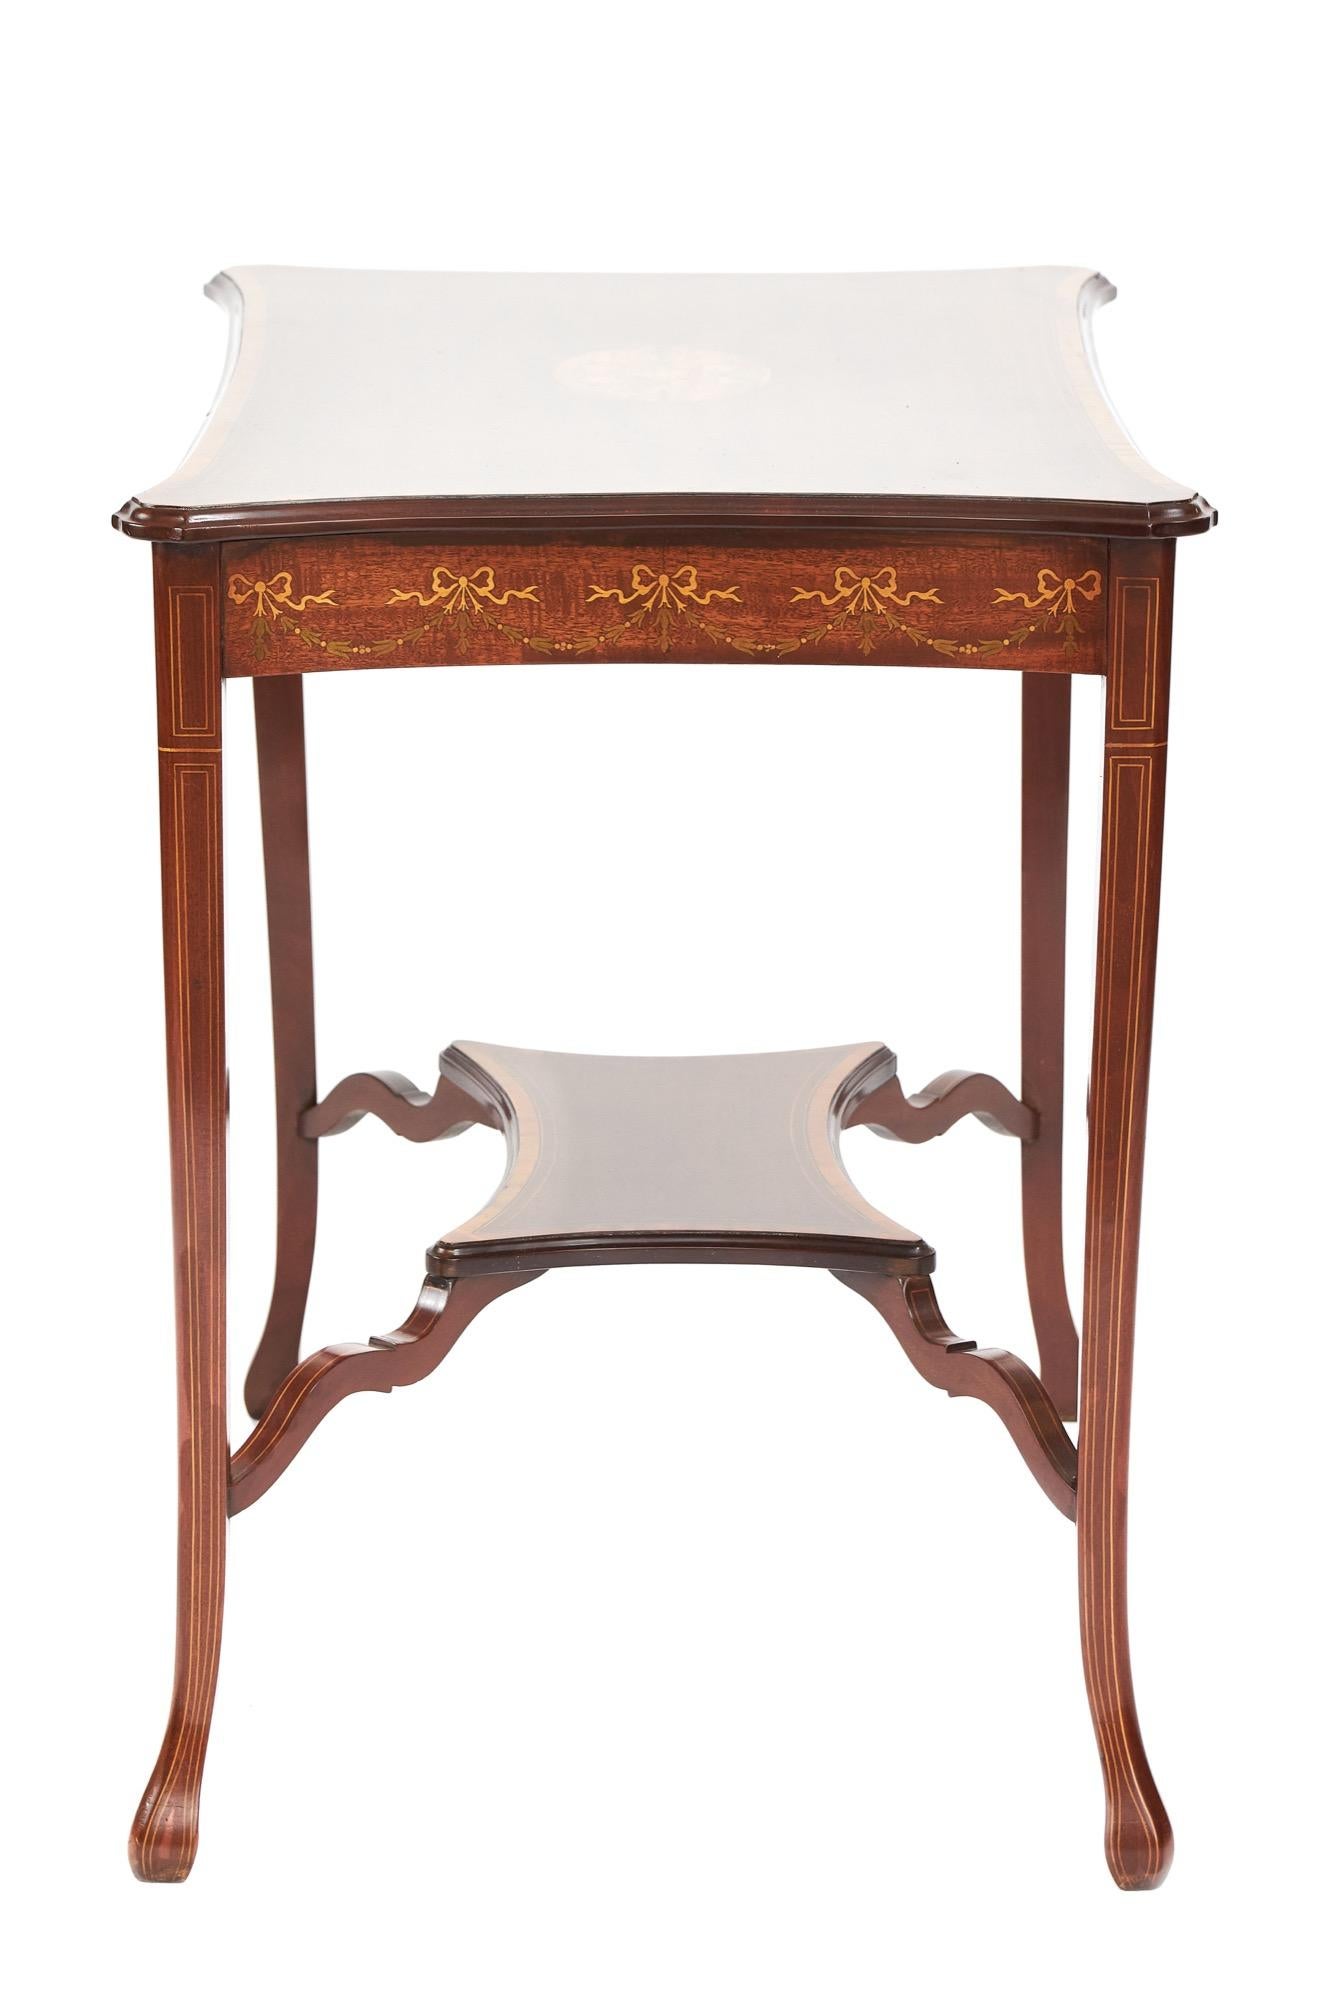 English Antique Edwardian Mahogany Inlaid Centre Table